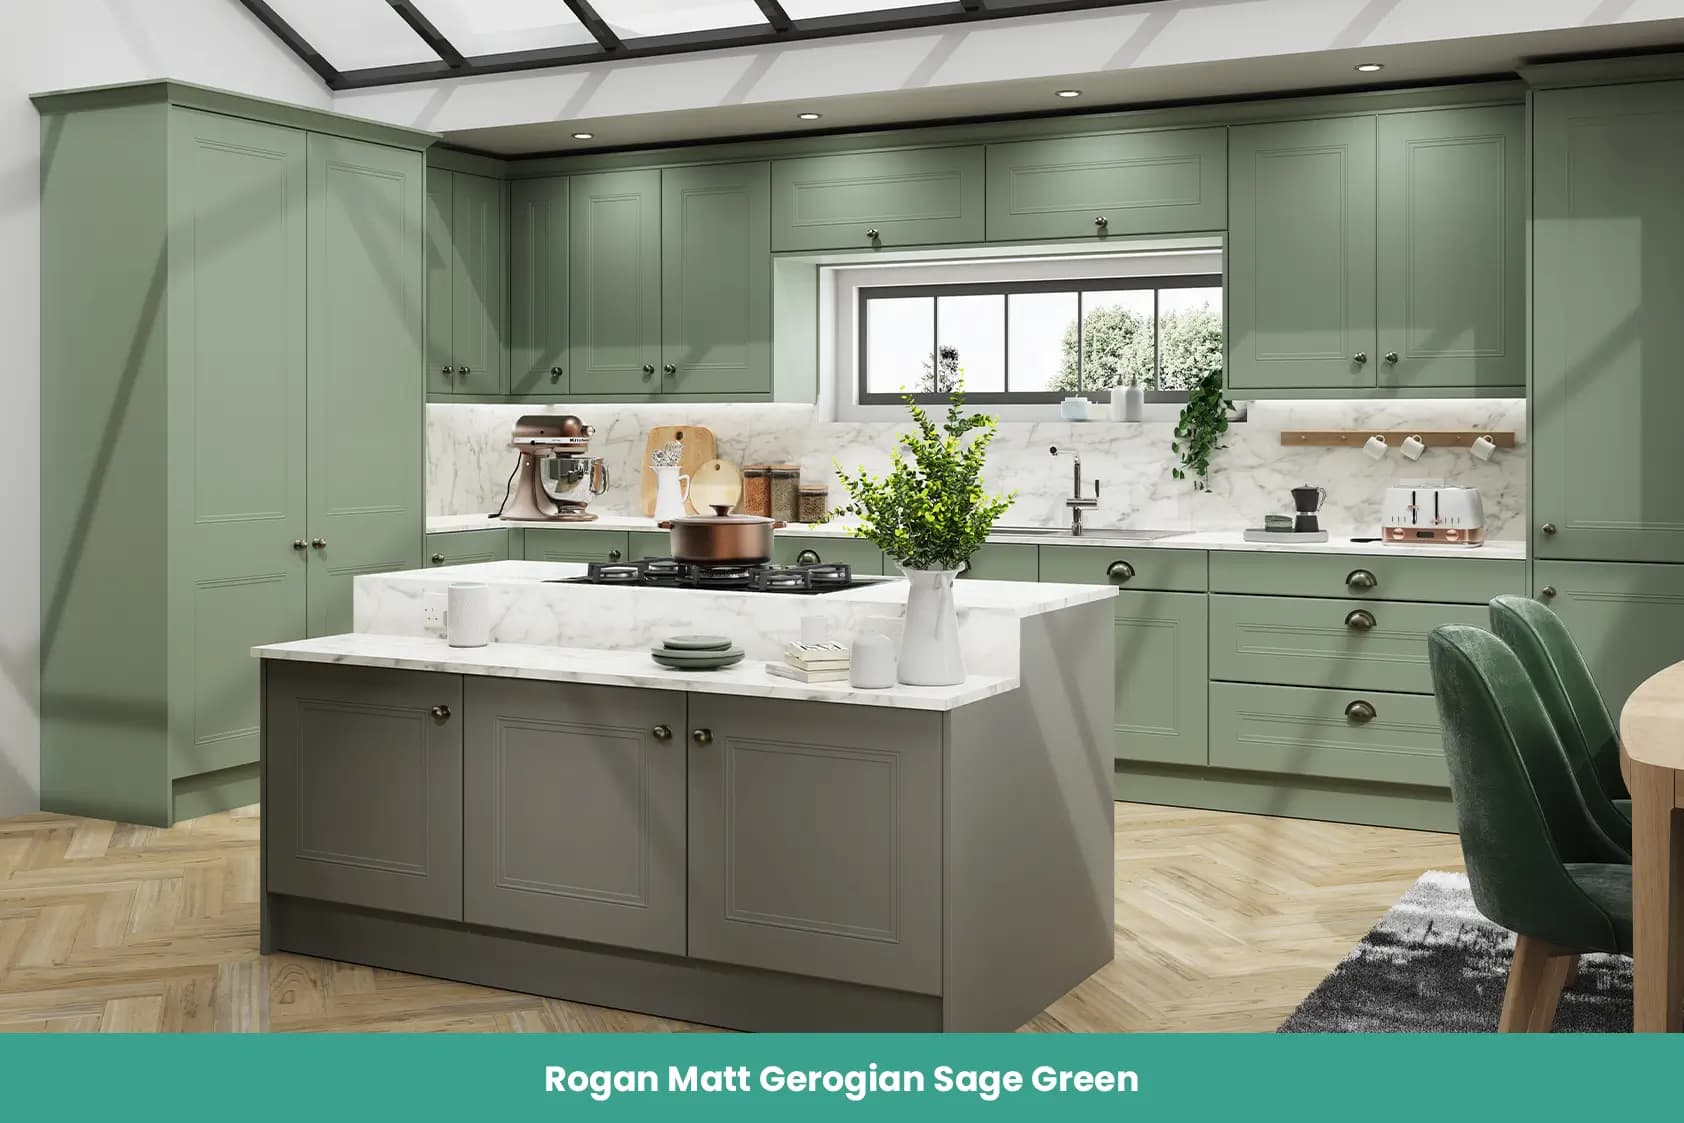 Rogan Matt Gerogian Sage Green Kitchen